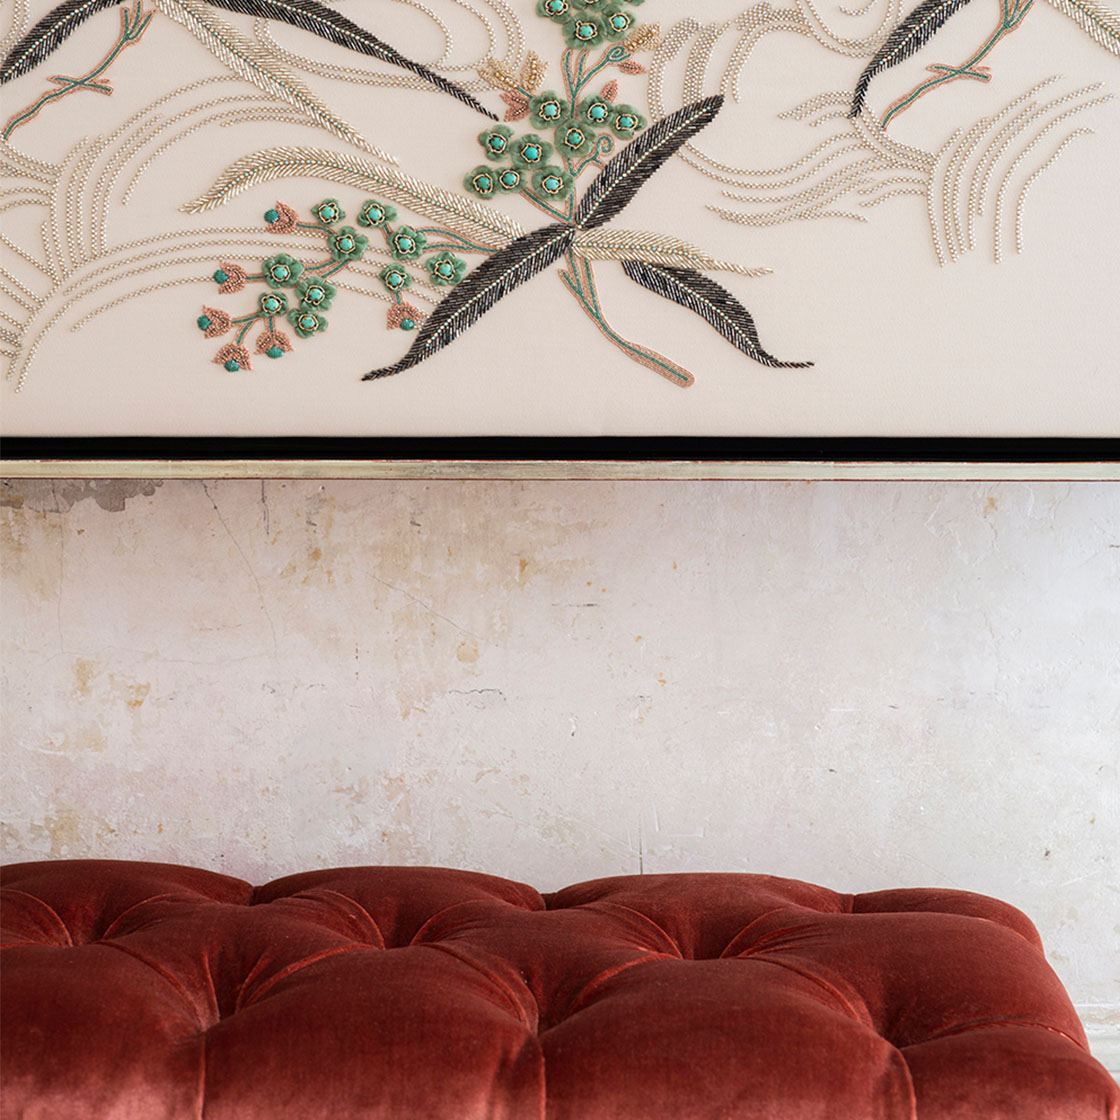 Alexandra footstool in Capri silk velvet - Terracotta with Sevilla panel - Beaumont & Fletcher